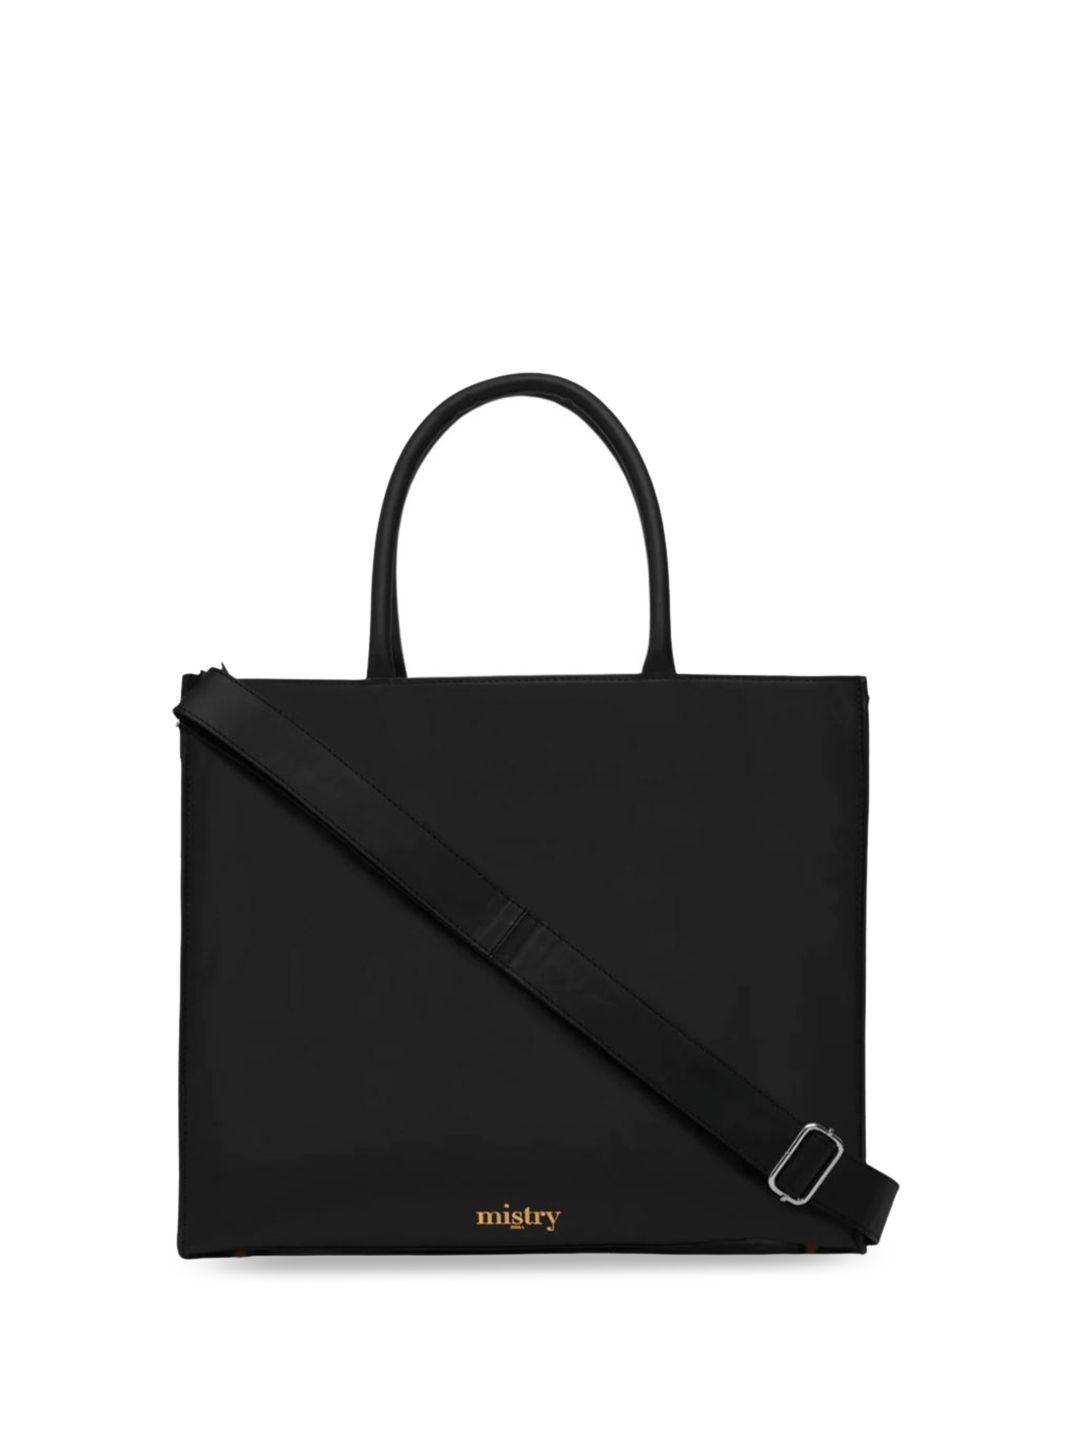 mistry oversized leather structured handheld bag